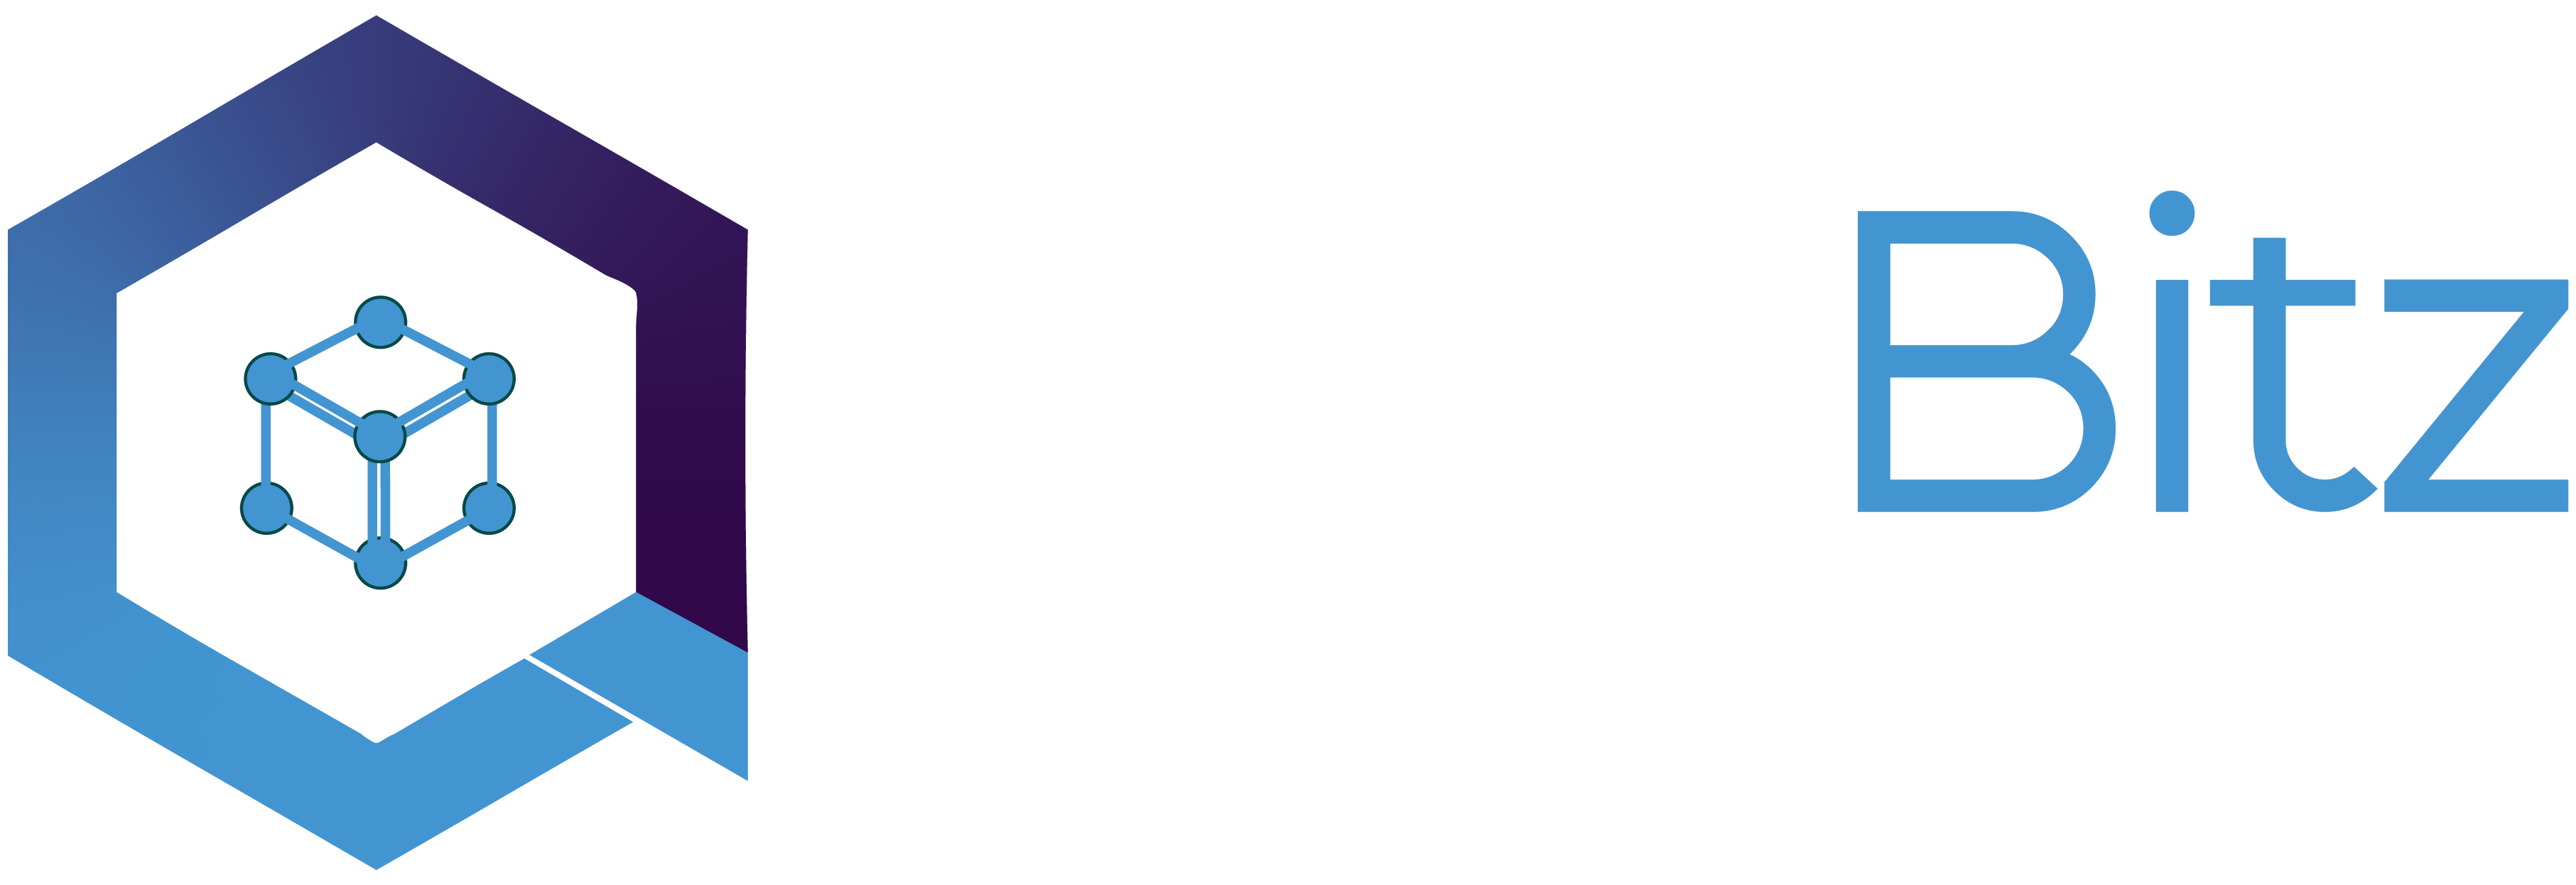 Algobitz